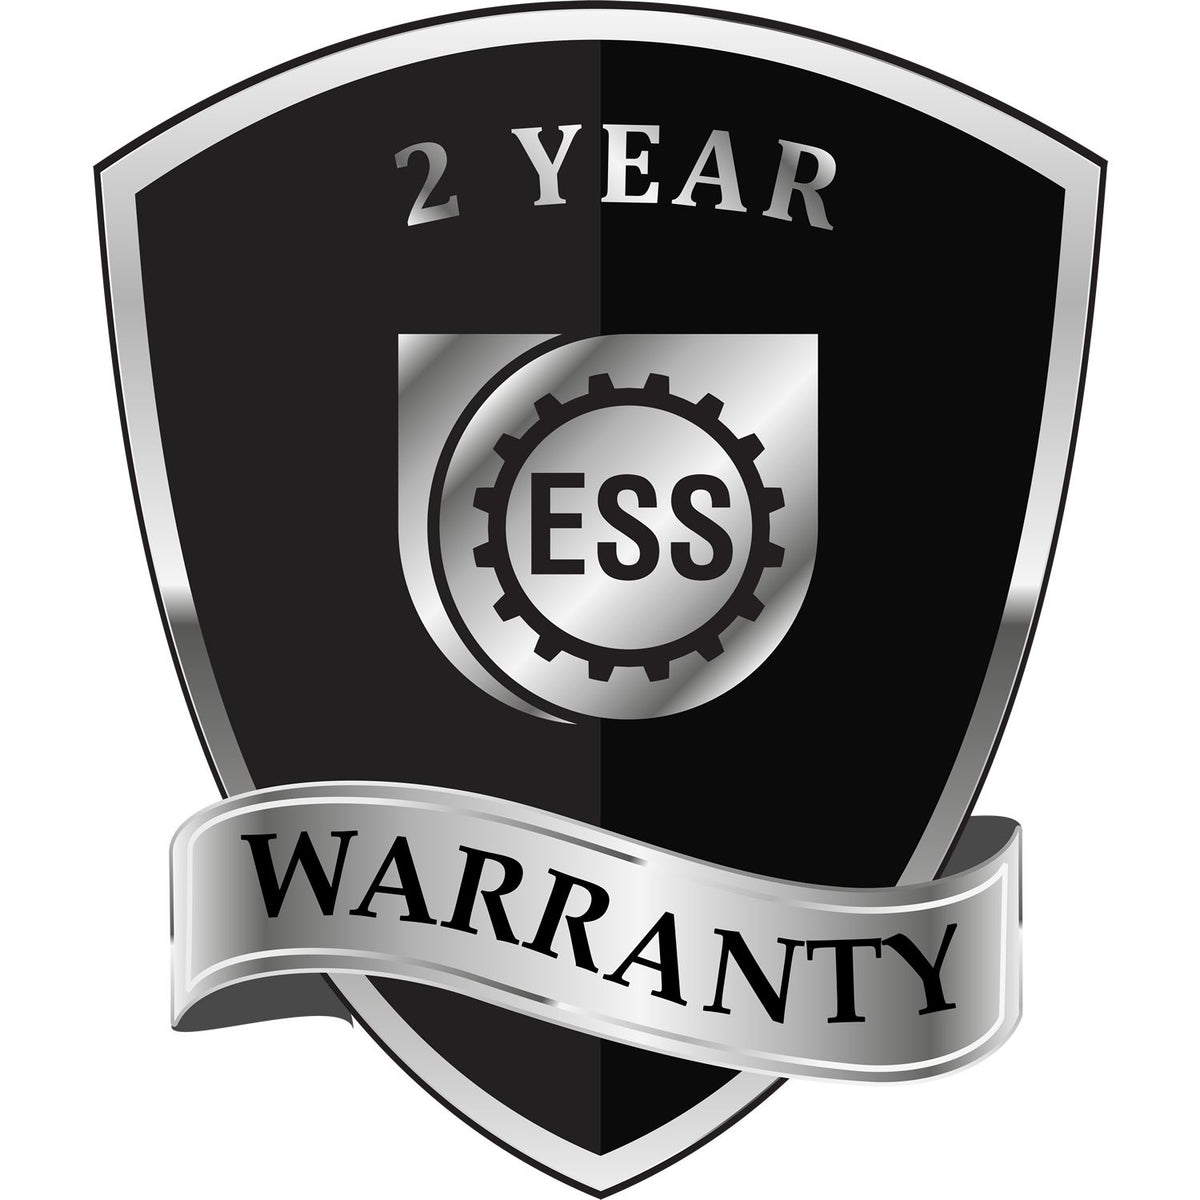 A black and silver badge or emblem showing warranty information for the Hybrid Washington Landscape Architect Seal